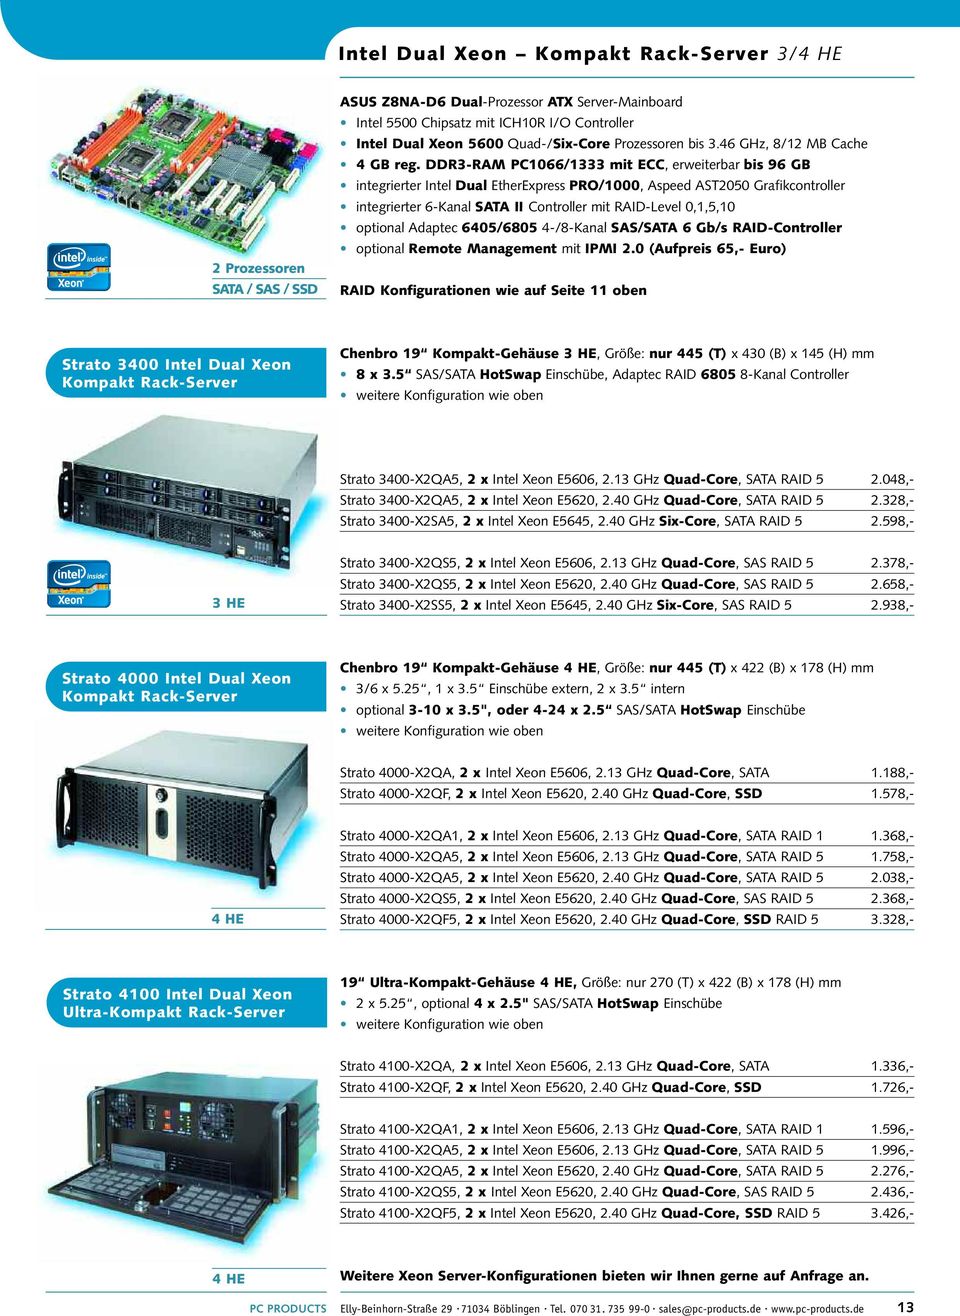 DDR3-RAM PC1066/1333 mit ECC, erweiterbar bis 96 GB integrierter Intel Dual EtherExpress PRO/1000, Aspeed AST2050 Grafikcontroller integrierter 6-Kanal SATA II Controller mit RAID-Level 0,1,5,10